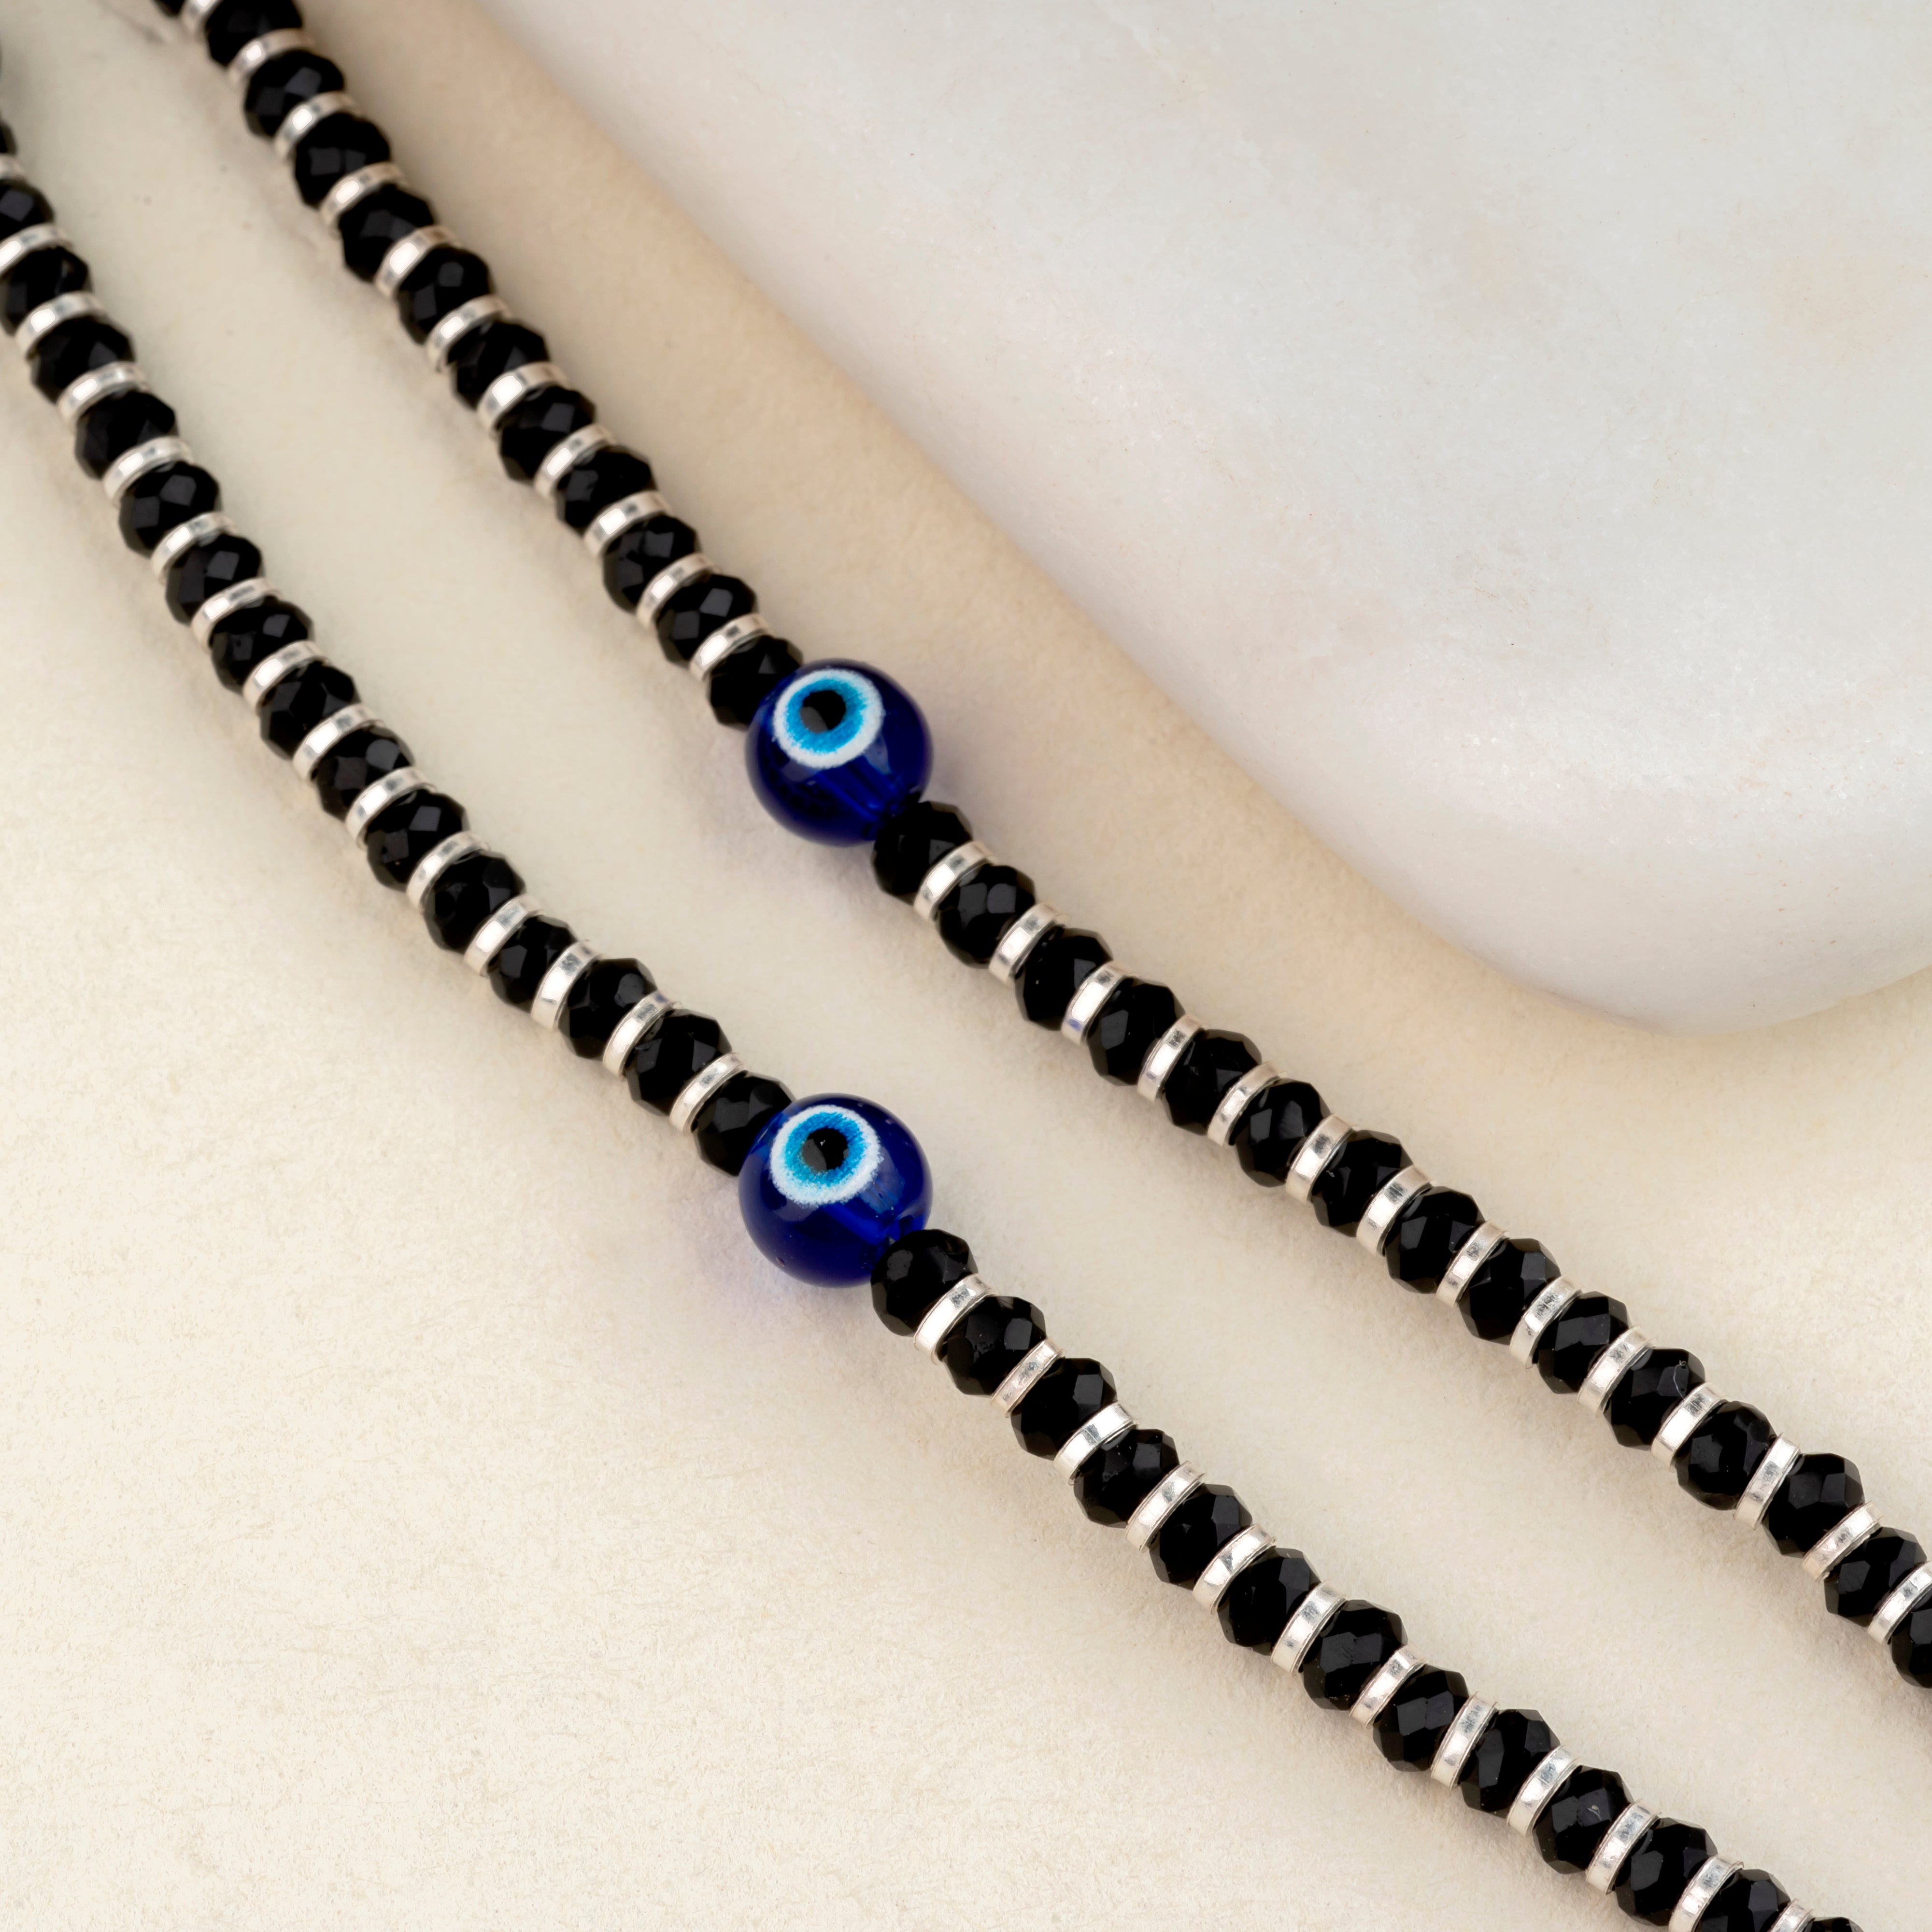 Buy quality silver evil eye kids black beads bracelet in Ahmedabad